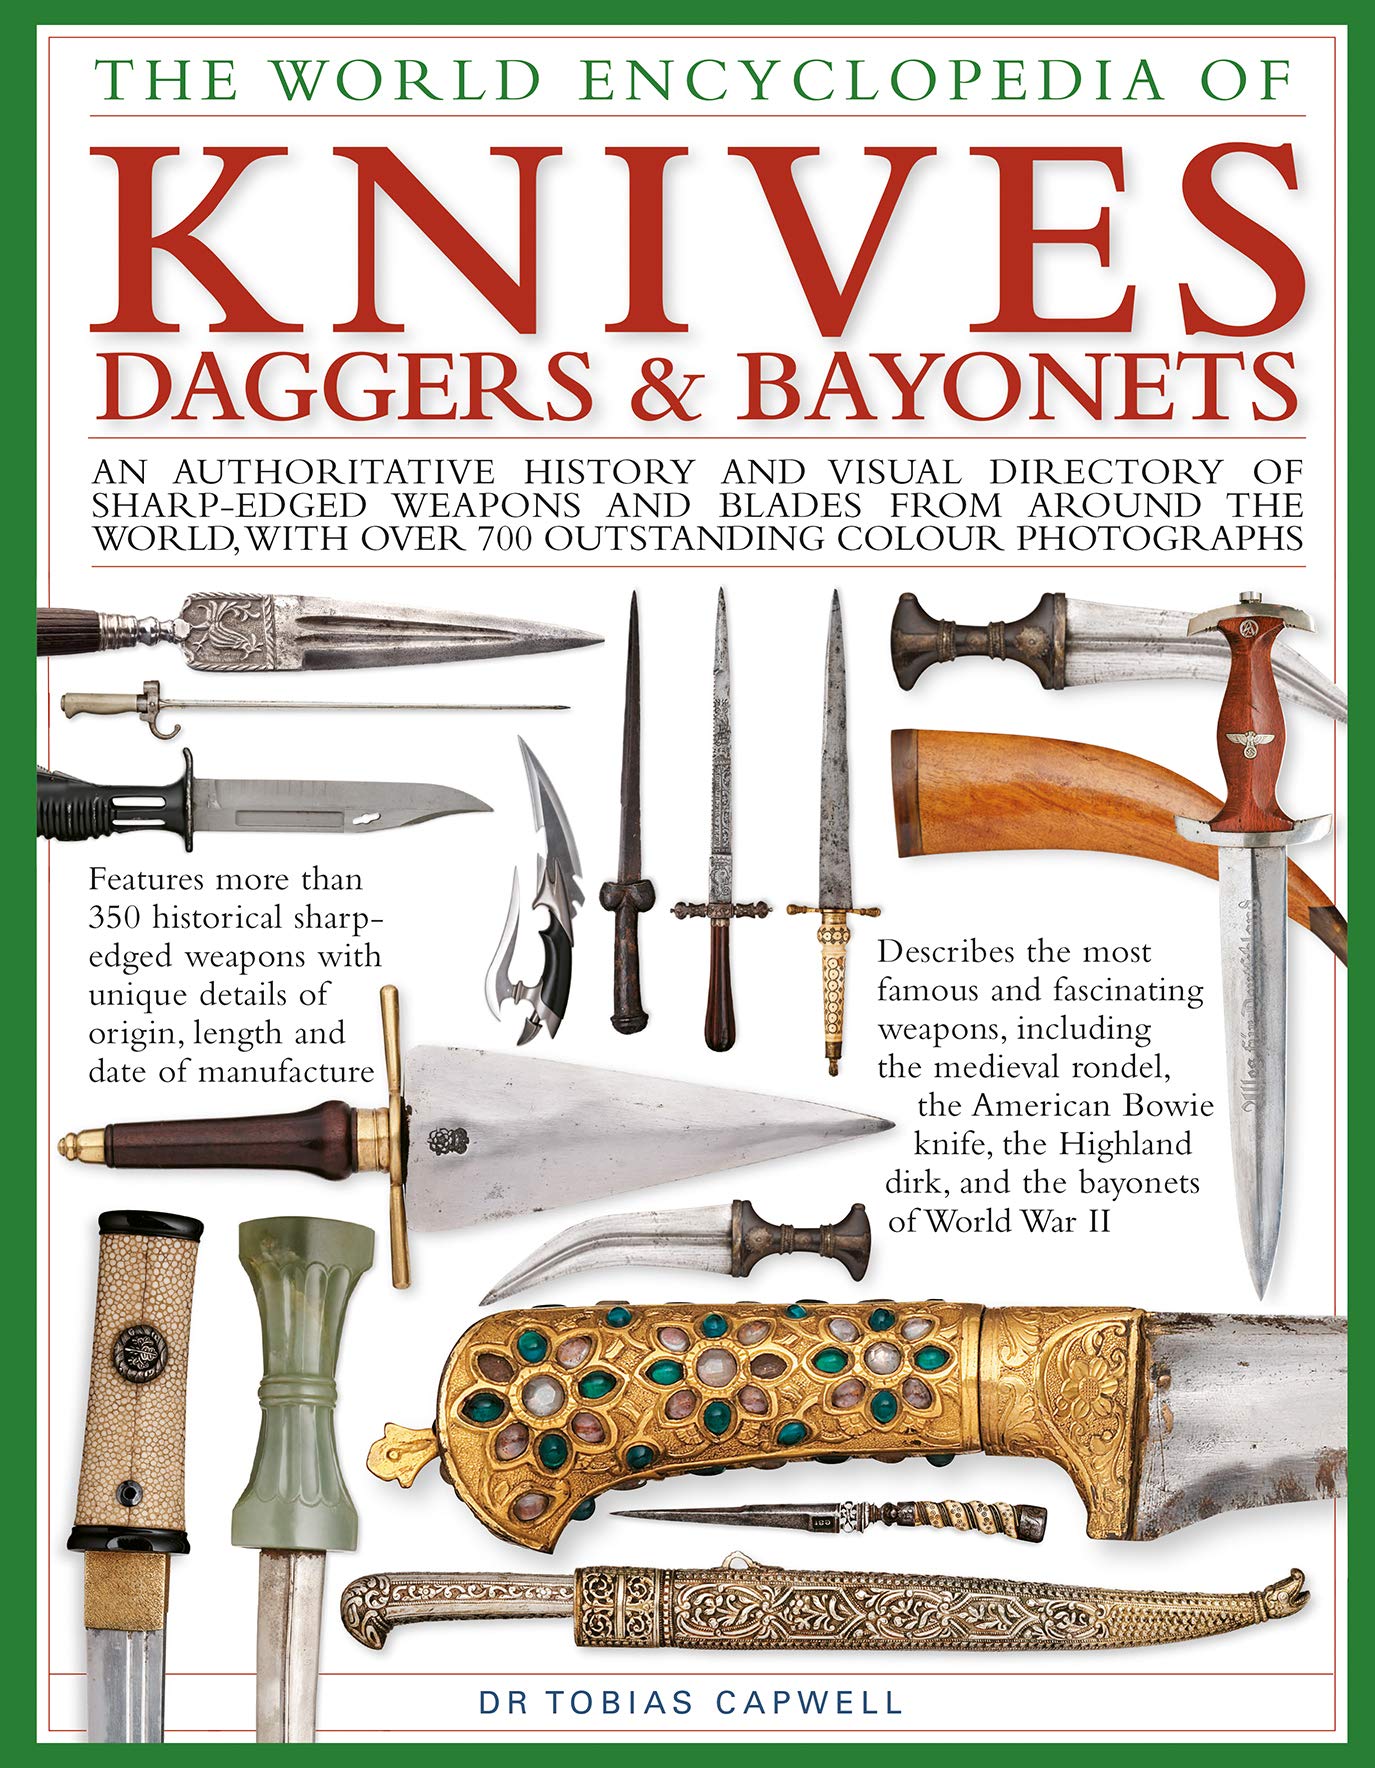 Illustrated encyclopedia of knives, daggers, and bayonets